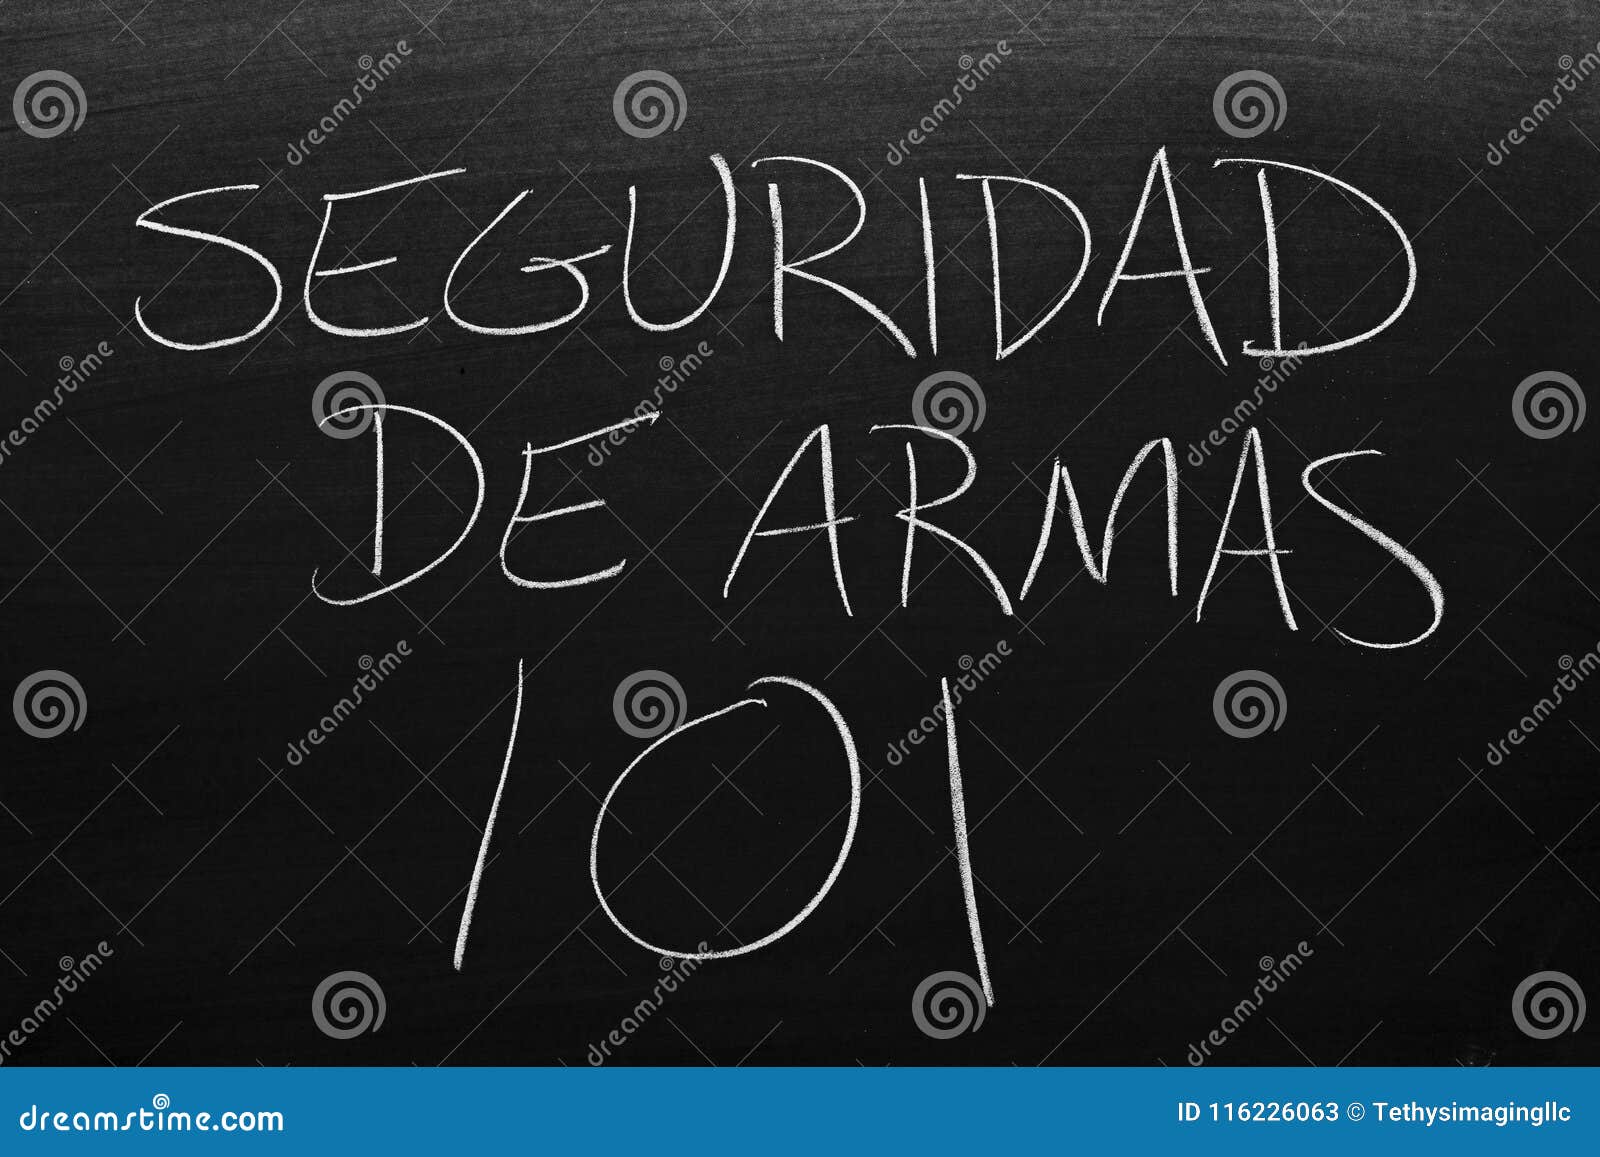 seguridad de armas 101 on a blackboard. translation: gun safety 101